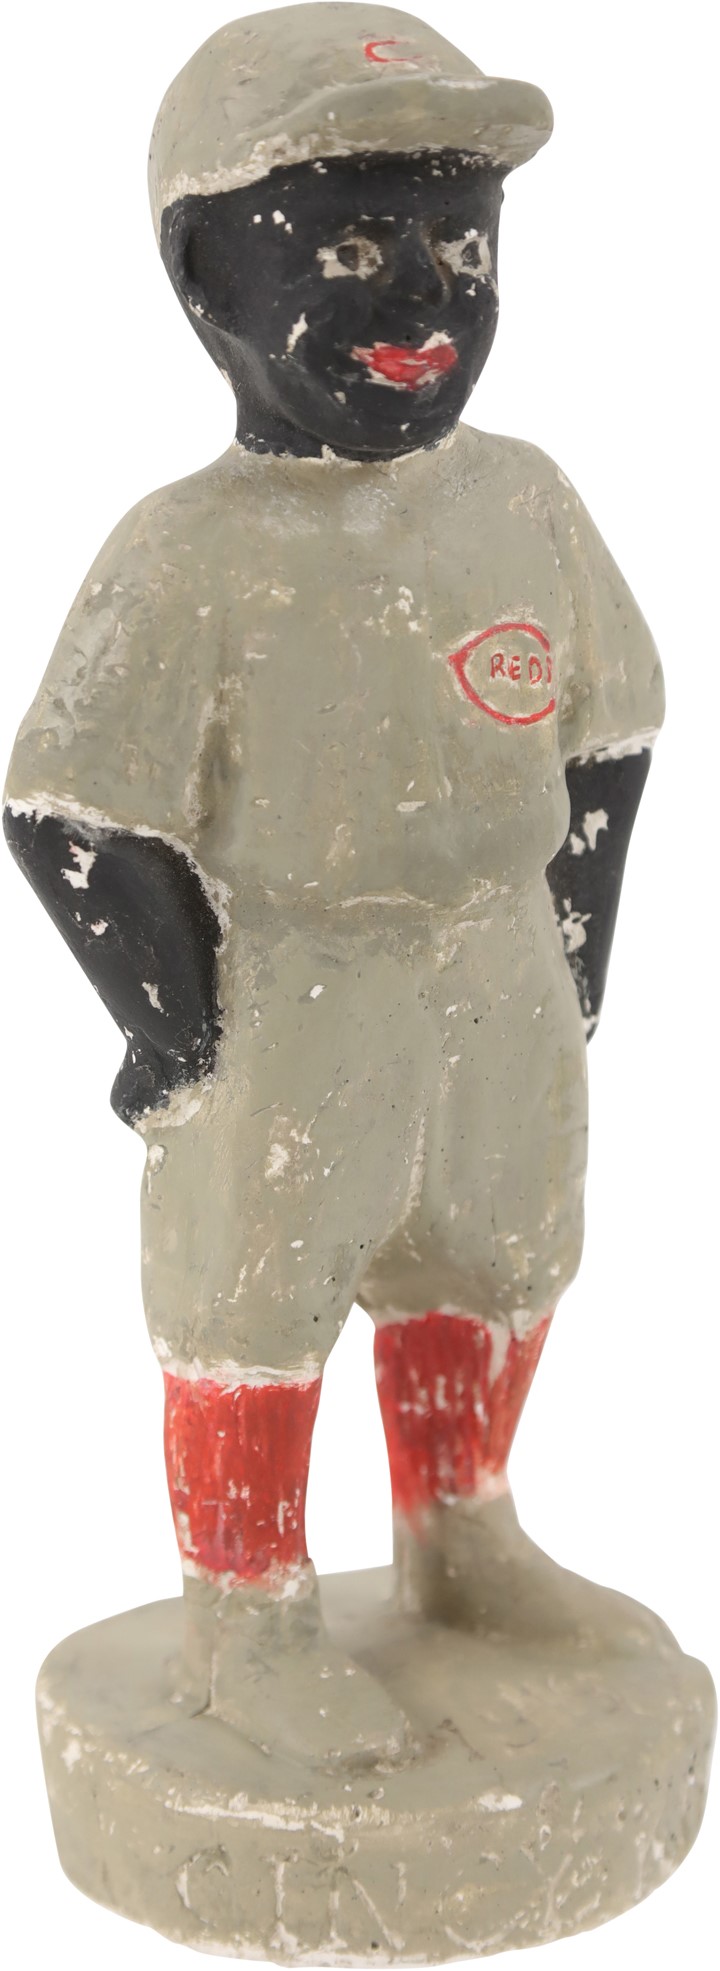 Chicago Black Sox Collection (1919-2019) - 1919 World Series Cincy Kid "Negro" Baseball Mascot